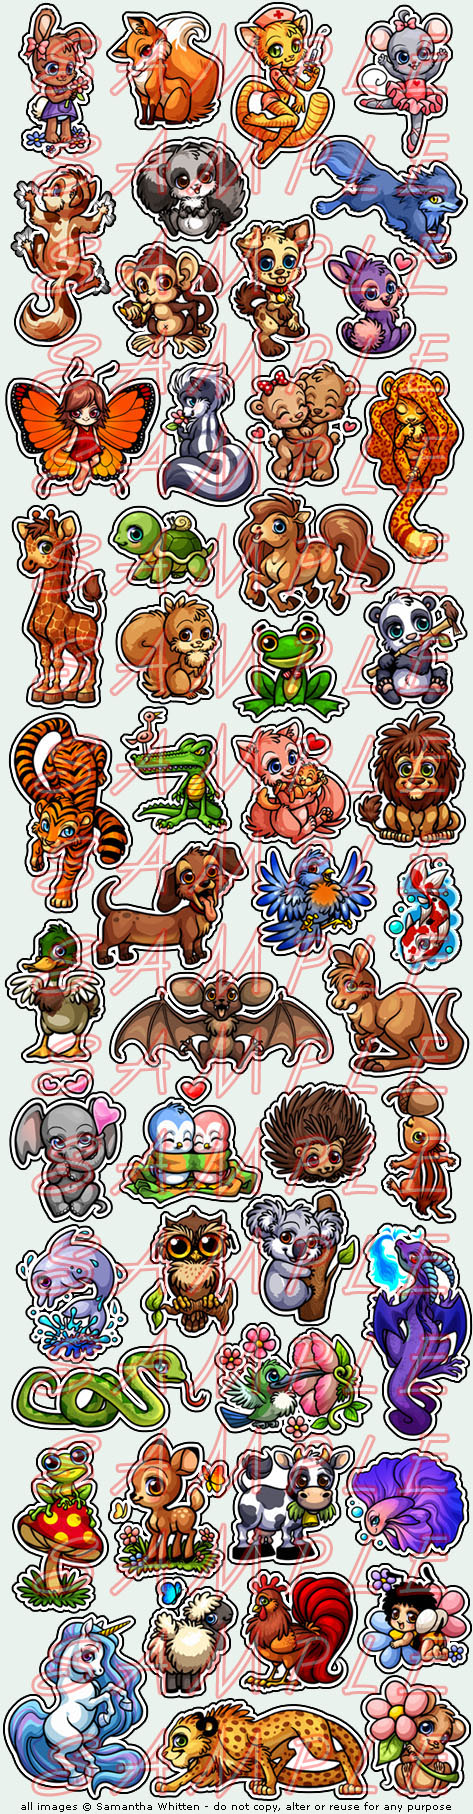 Fifty Cartoon Animal Tattoos